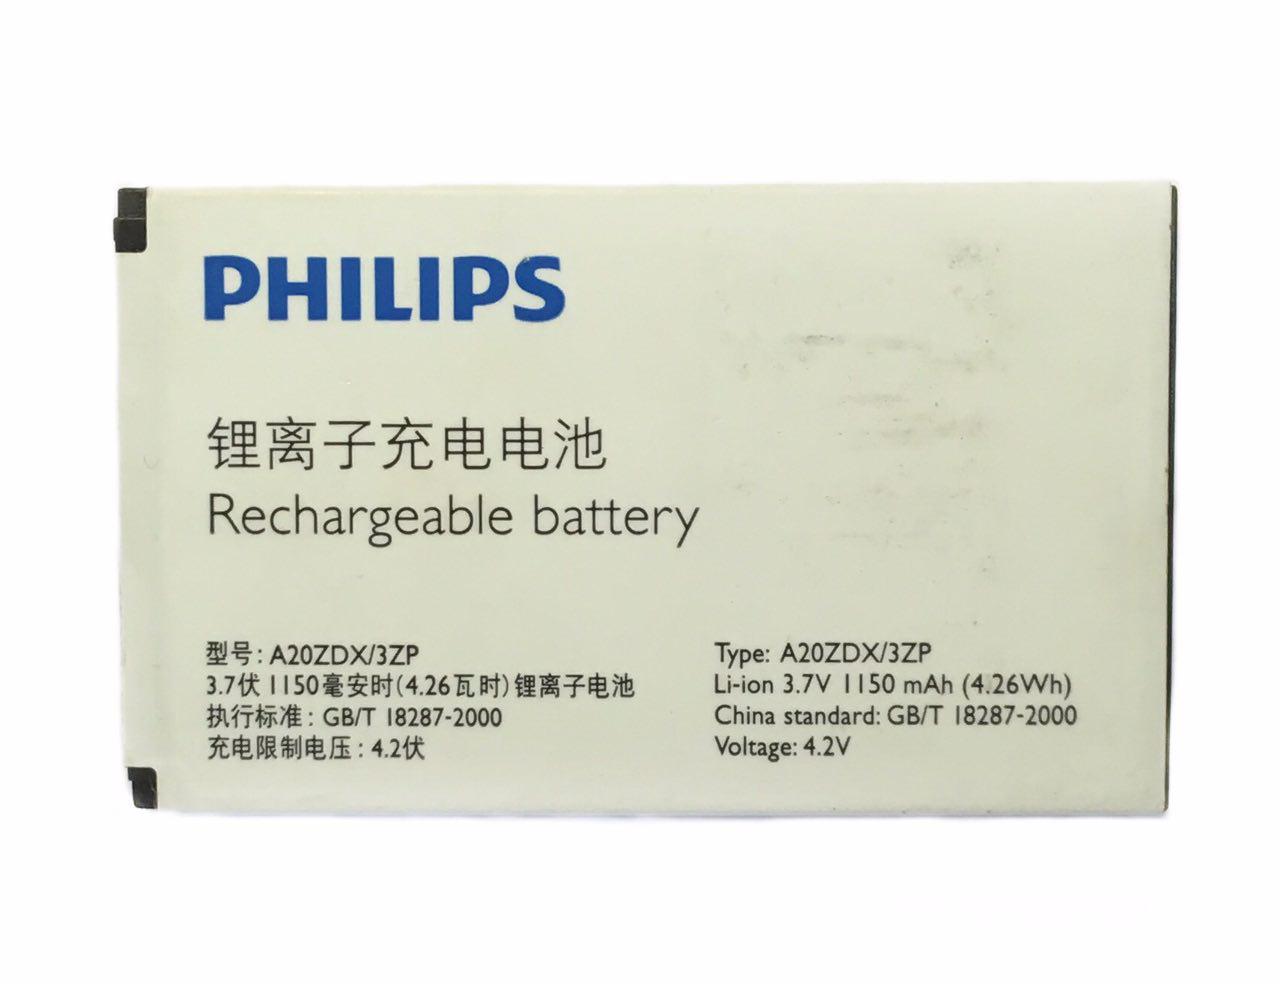 Купить батарею филипс. Philips a20zdx/3zp. A20zdx/3zp аккумулятор. Philips Xenium x100 аккумулятор. Philips Xenium x100.